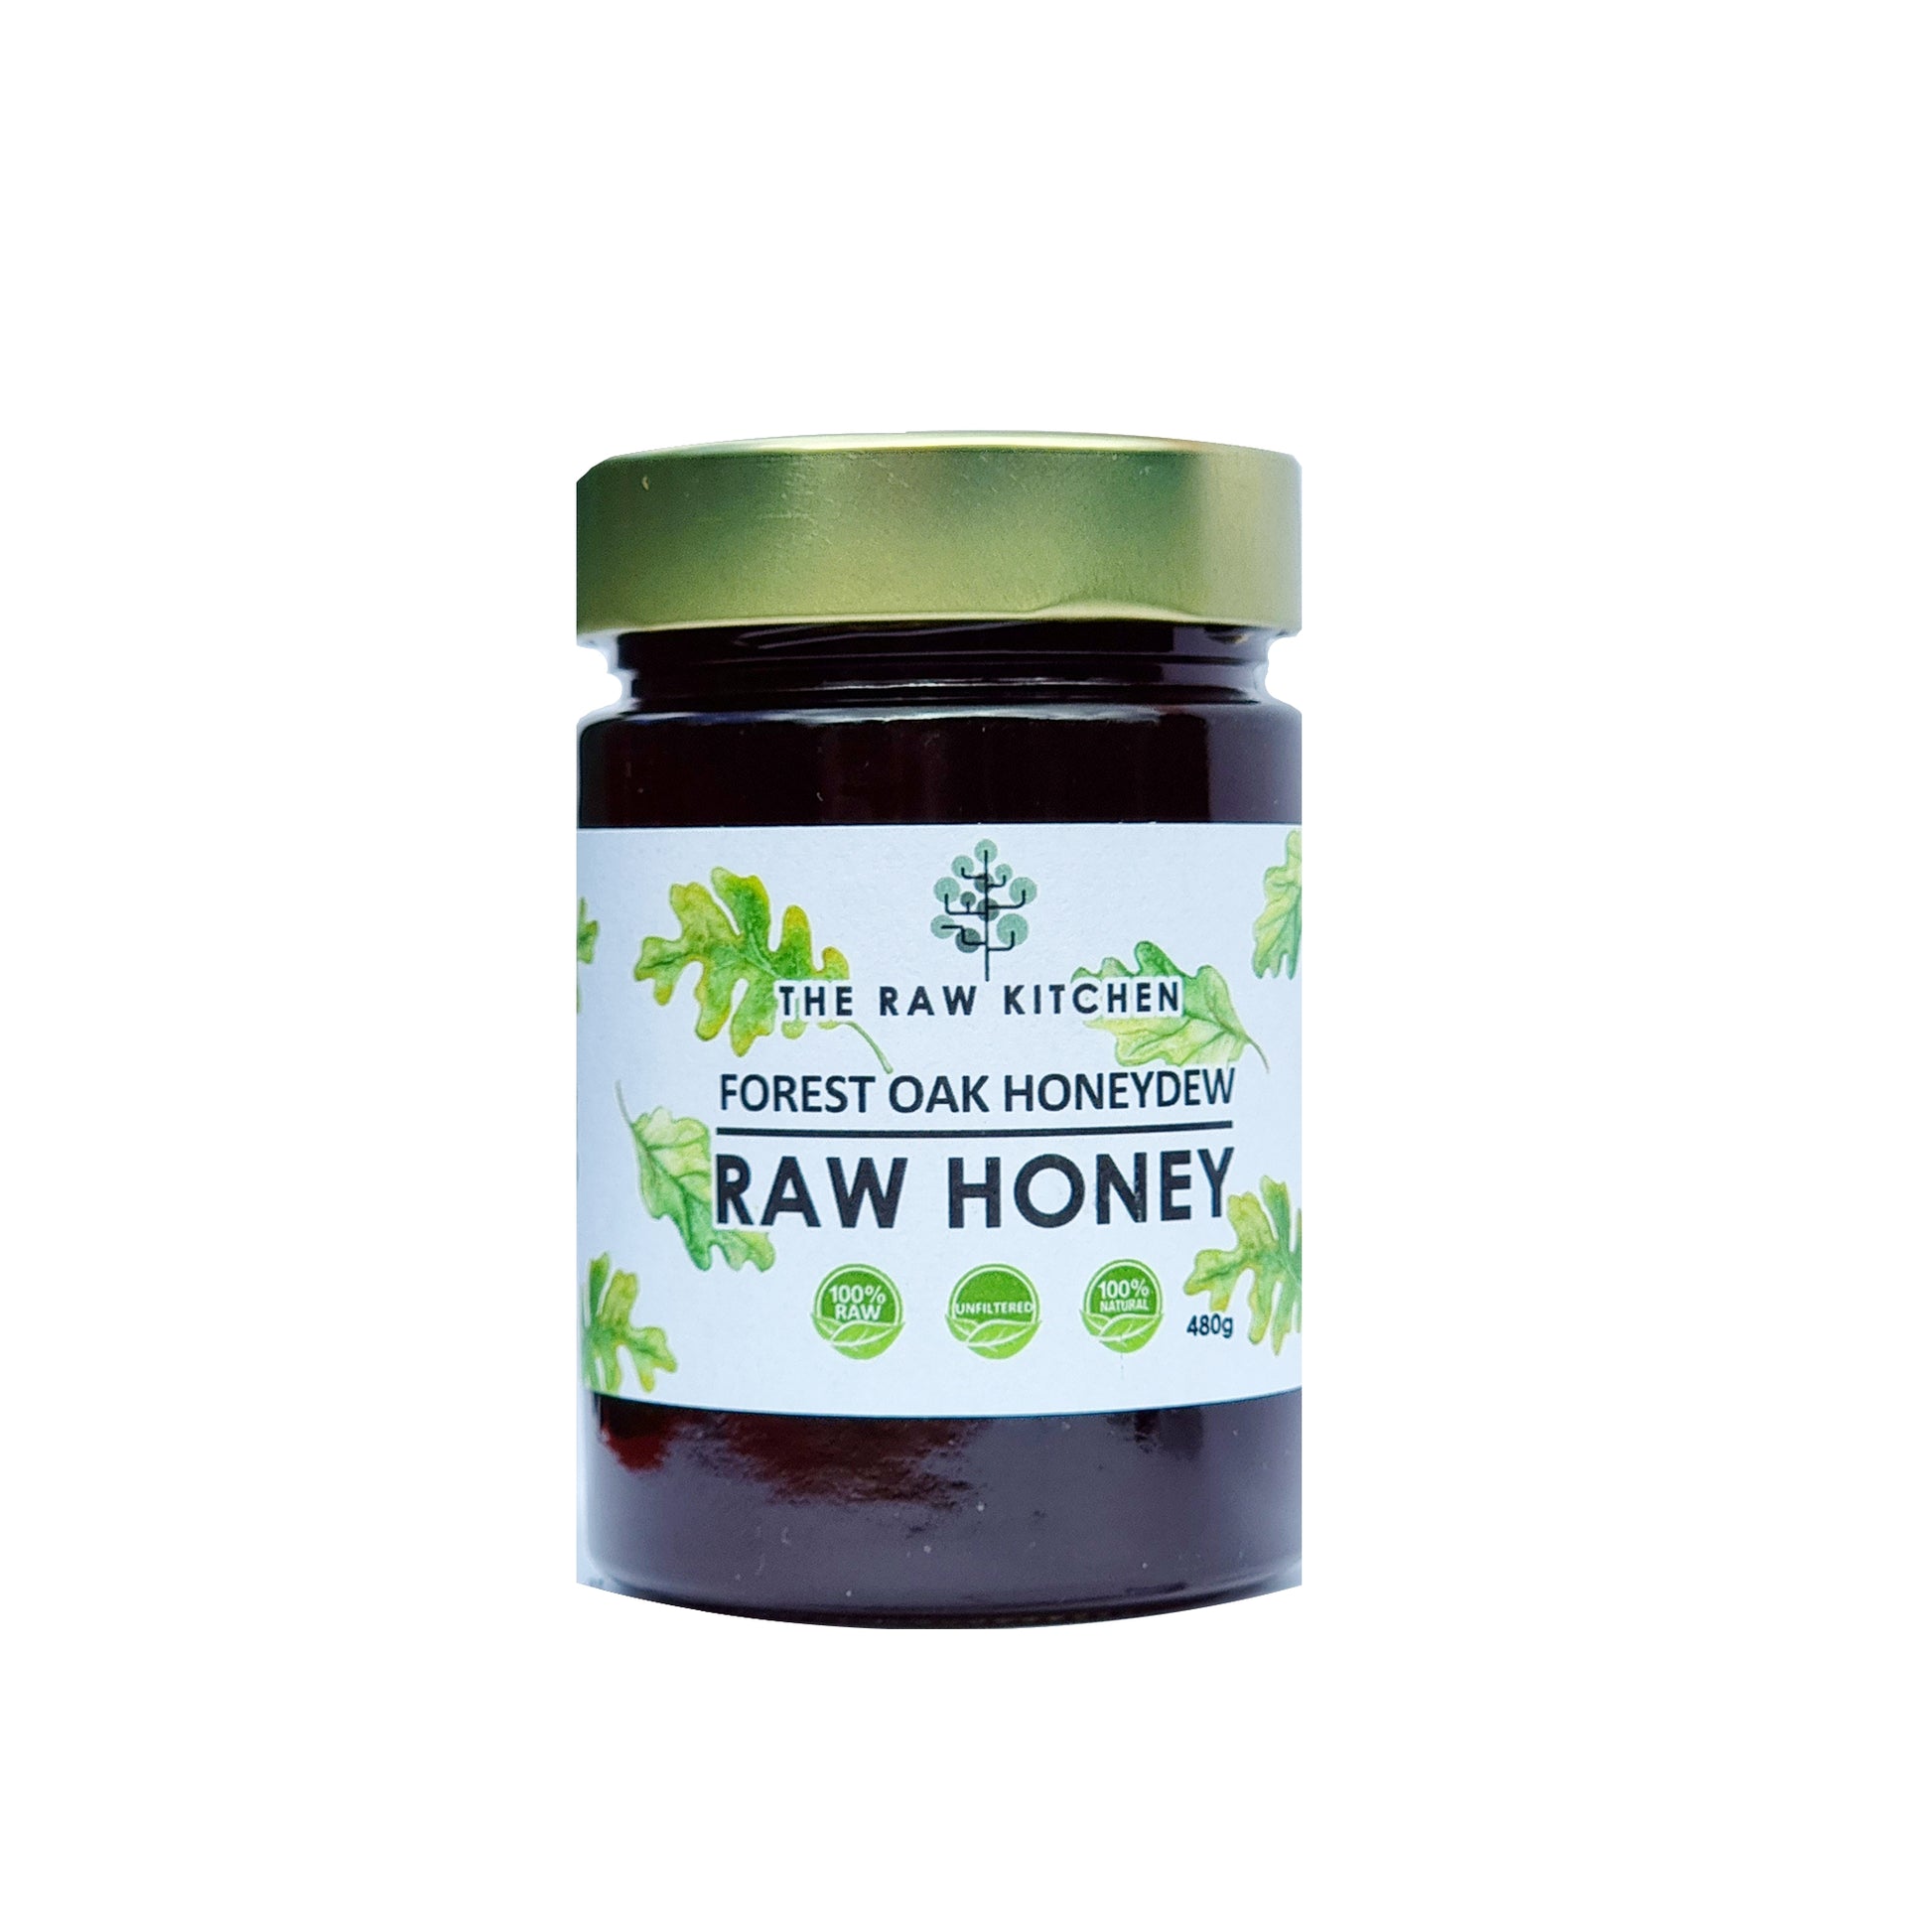 FOREST OAK WITH HONEYDEW RAW HONEY 450g - The Raw Kitchen UK  really raw honey raw, unfiltered honey, raw honey benefits, sainsburys, tescos